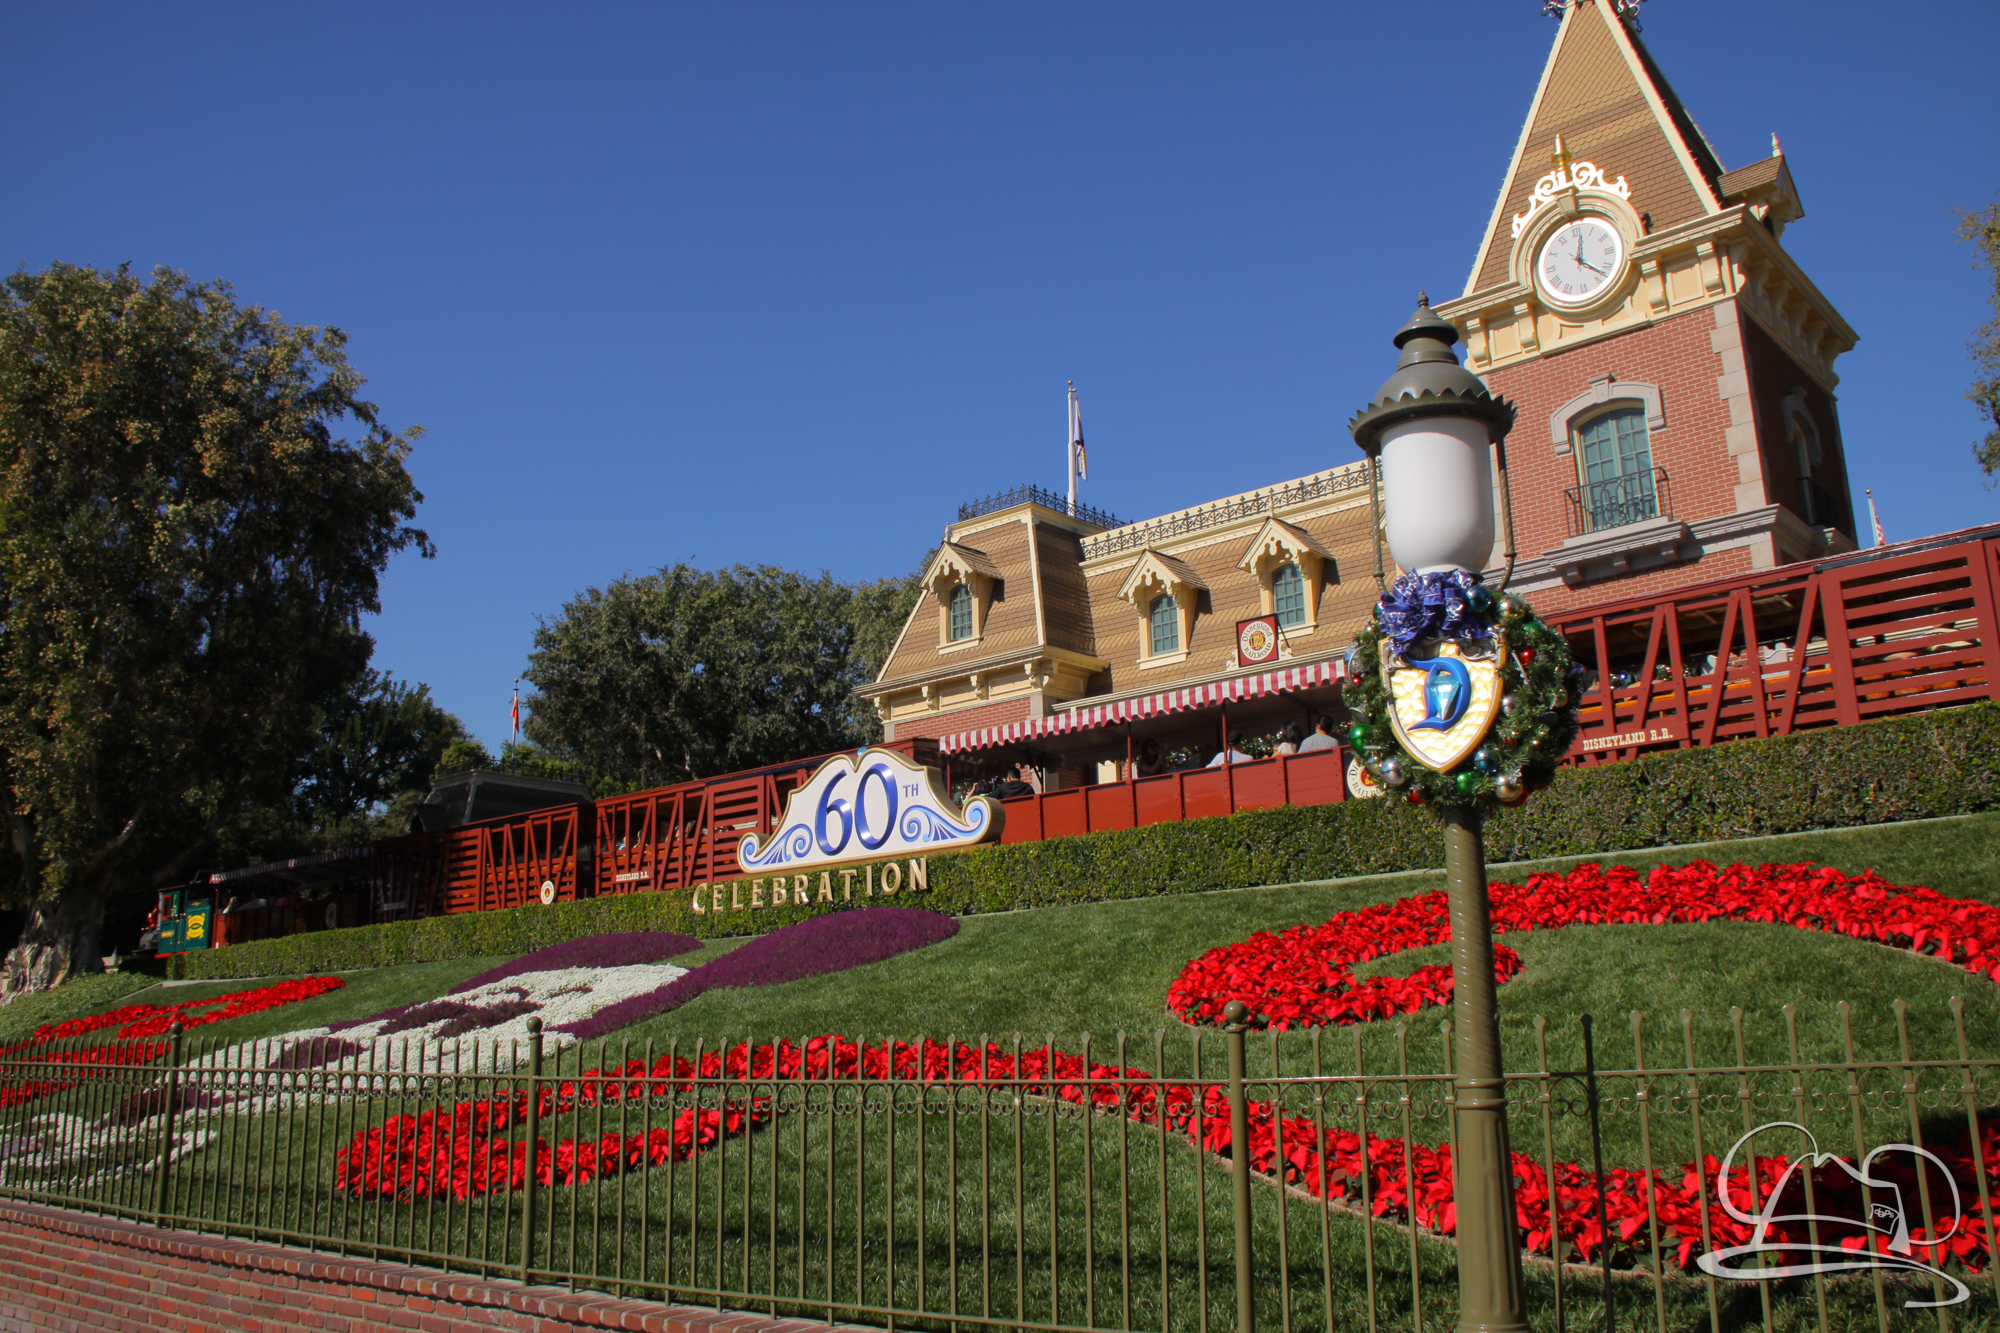 Disneyland Resort Adds Tightened Security & New Rule Regulations